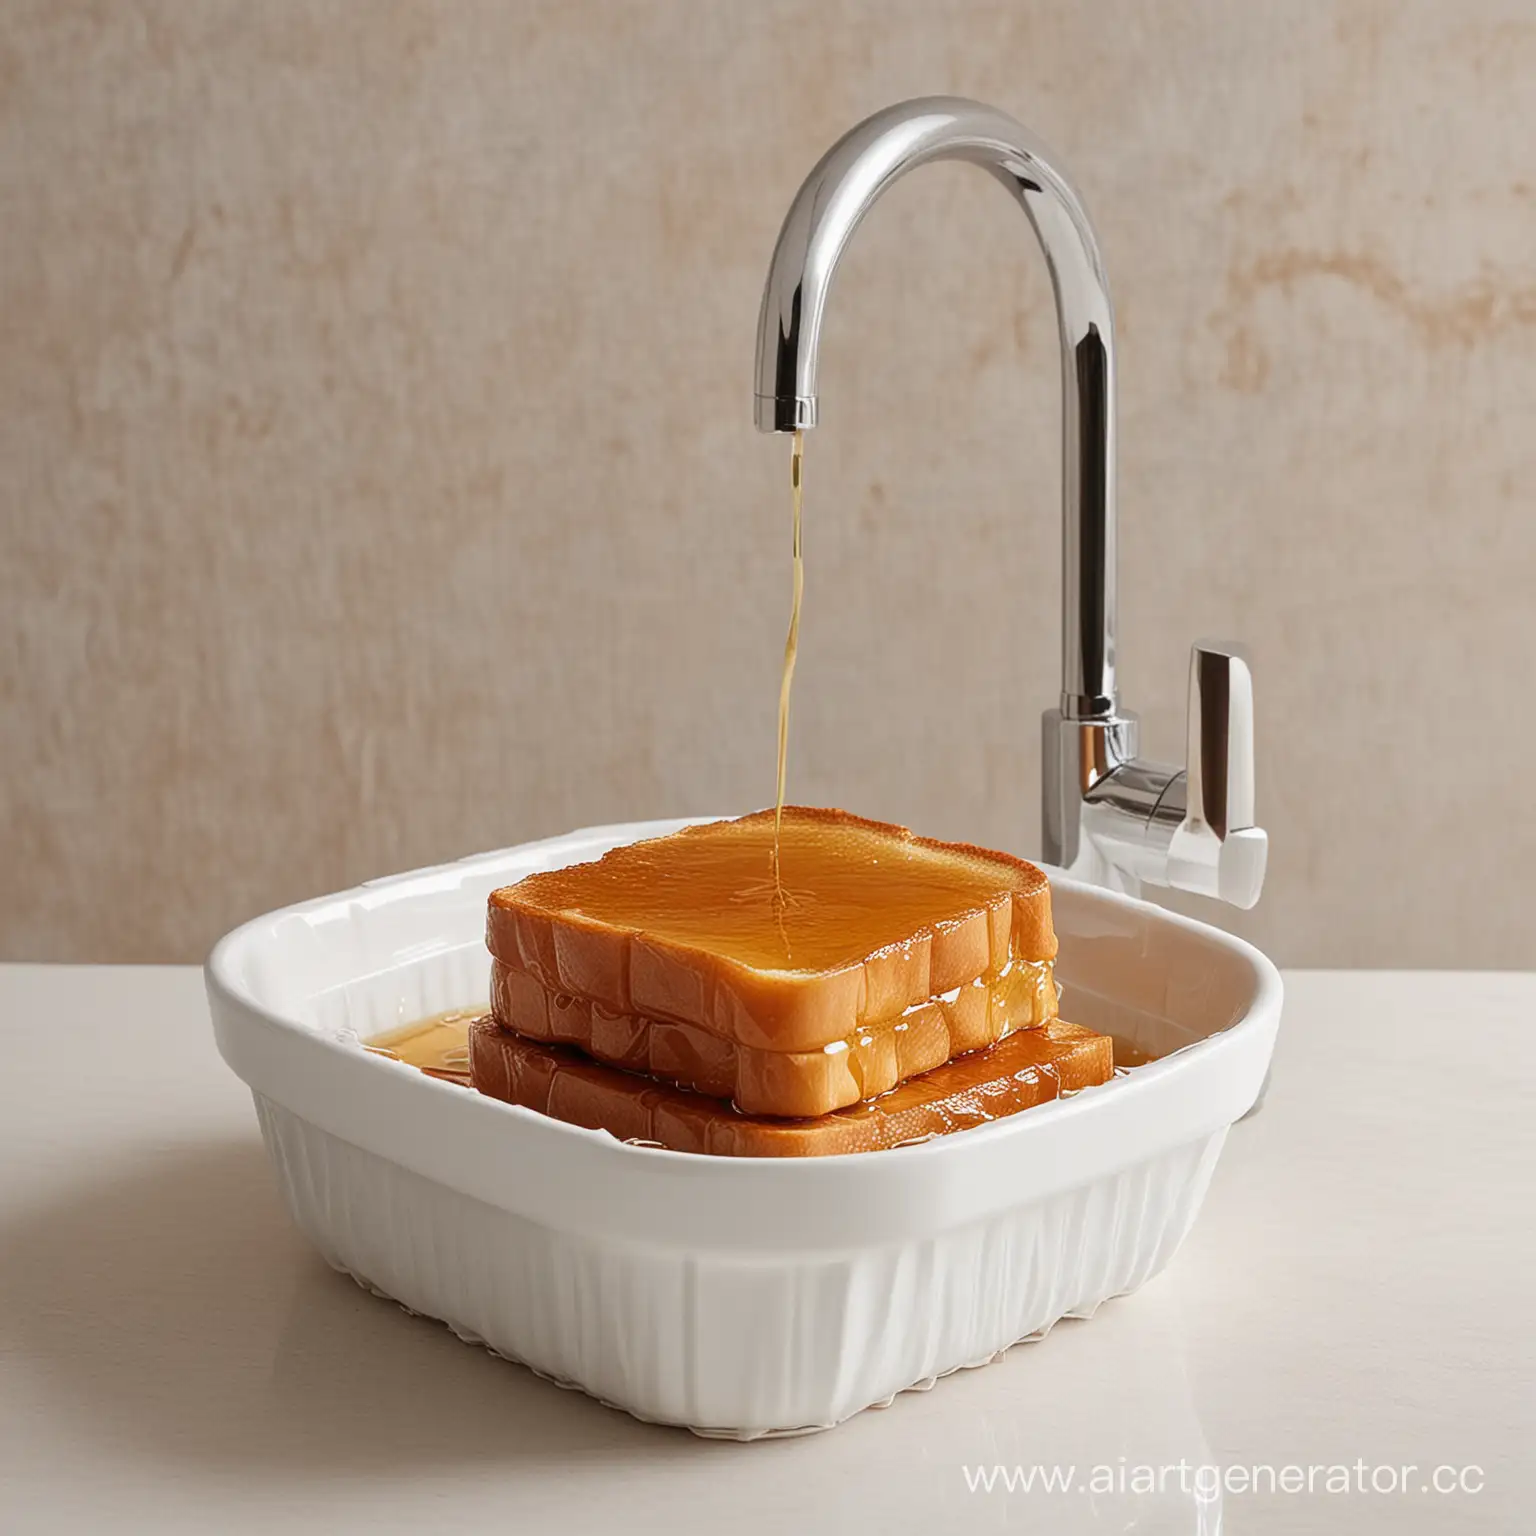 Sweet-Treat-Toast-with-Dripping-Honey-and-Ceramic-Washbasin